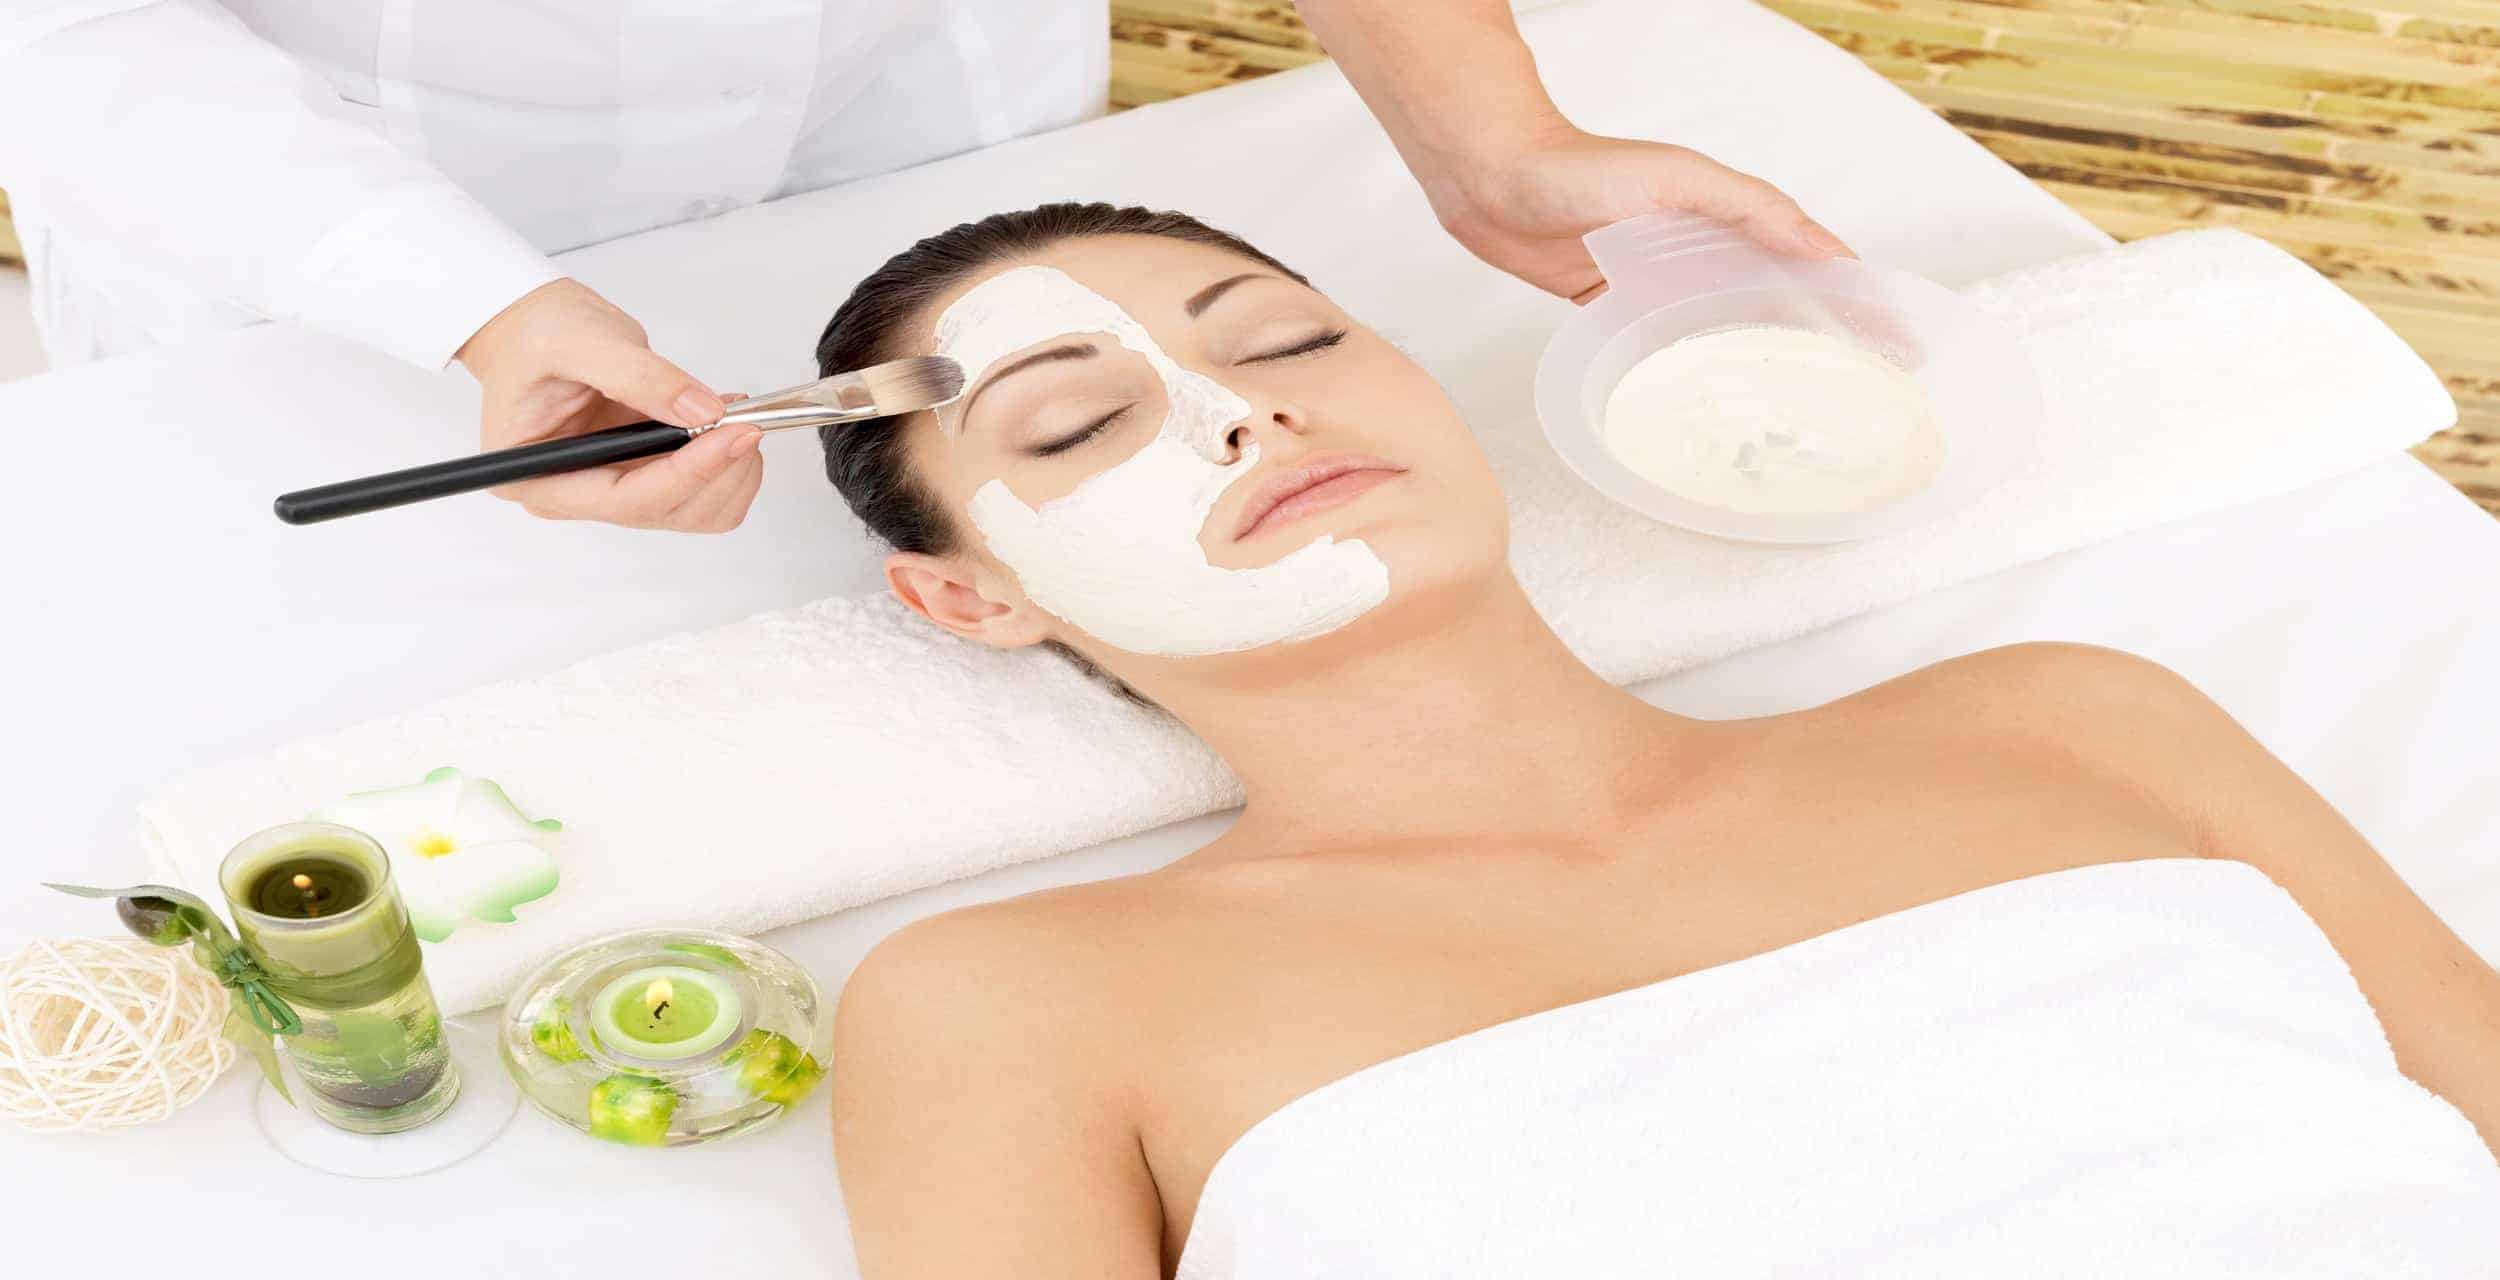 skin care routine for oily skin